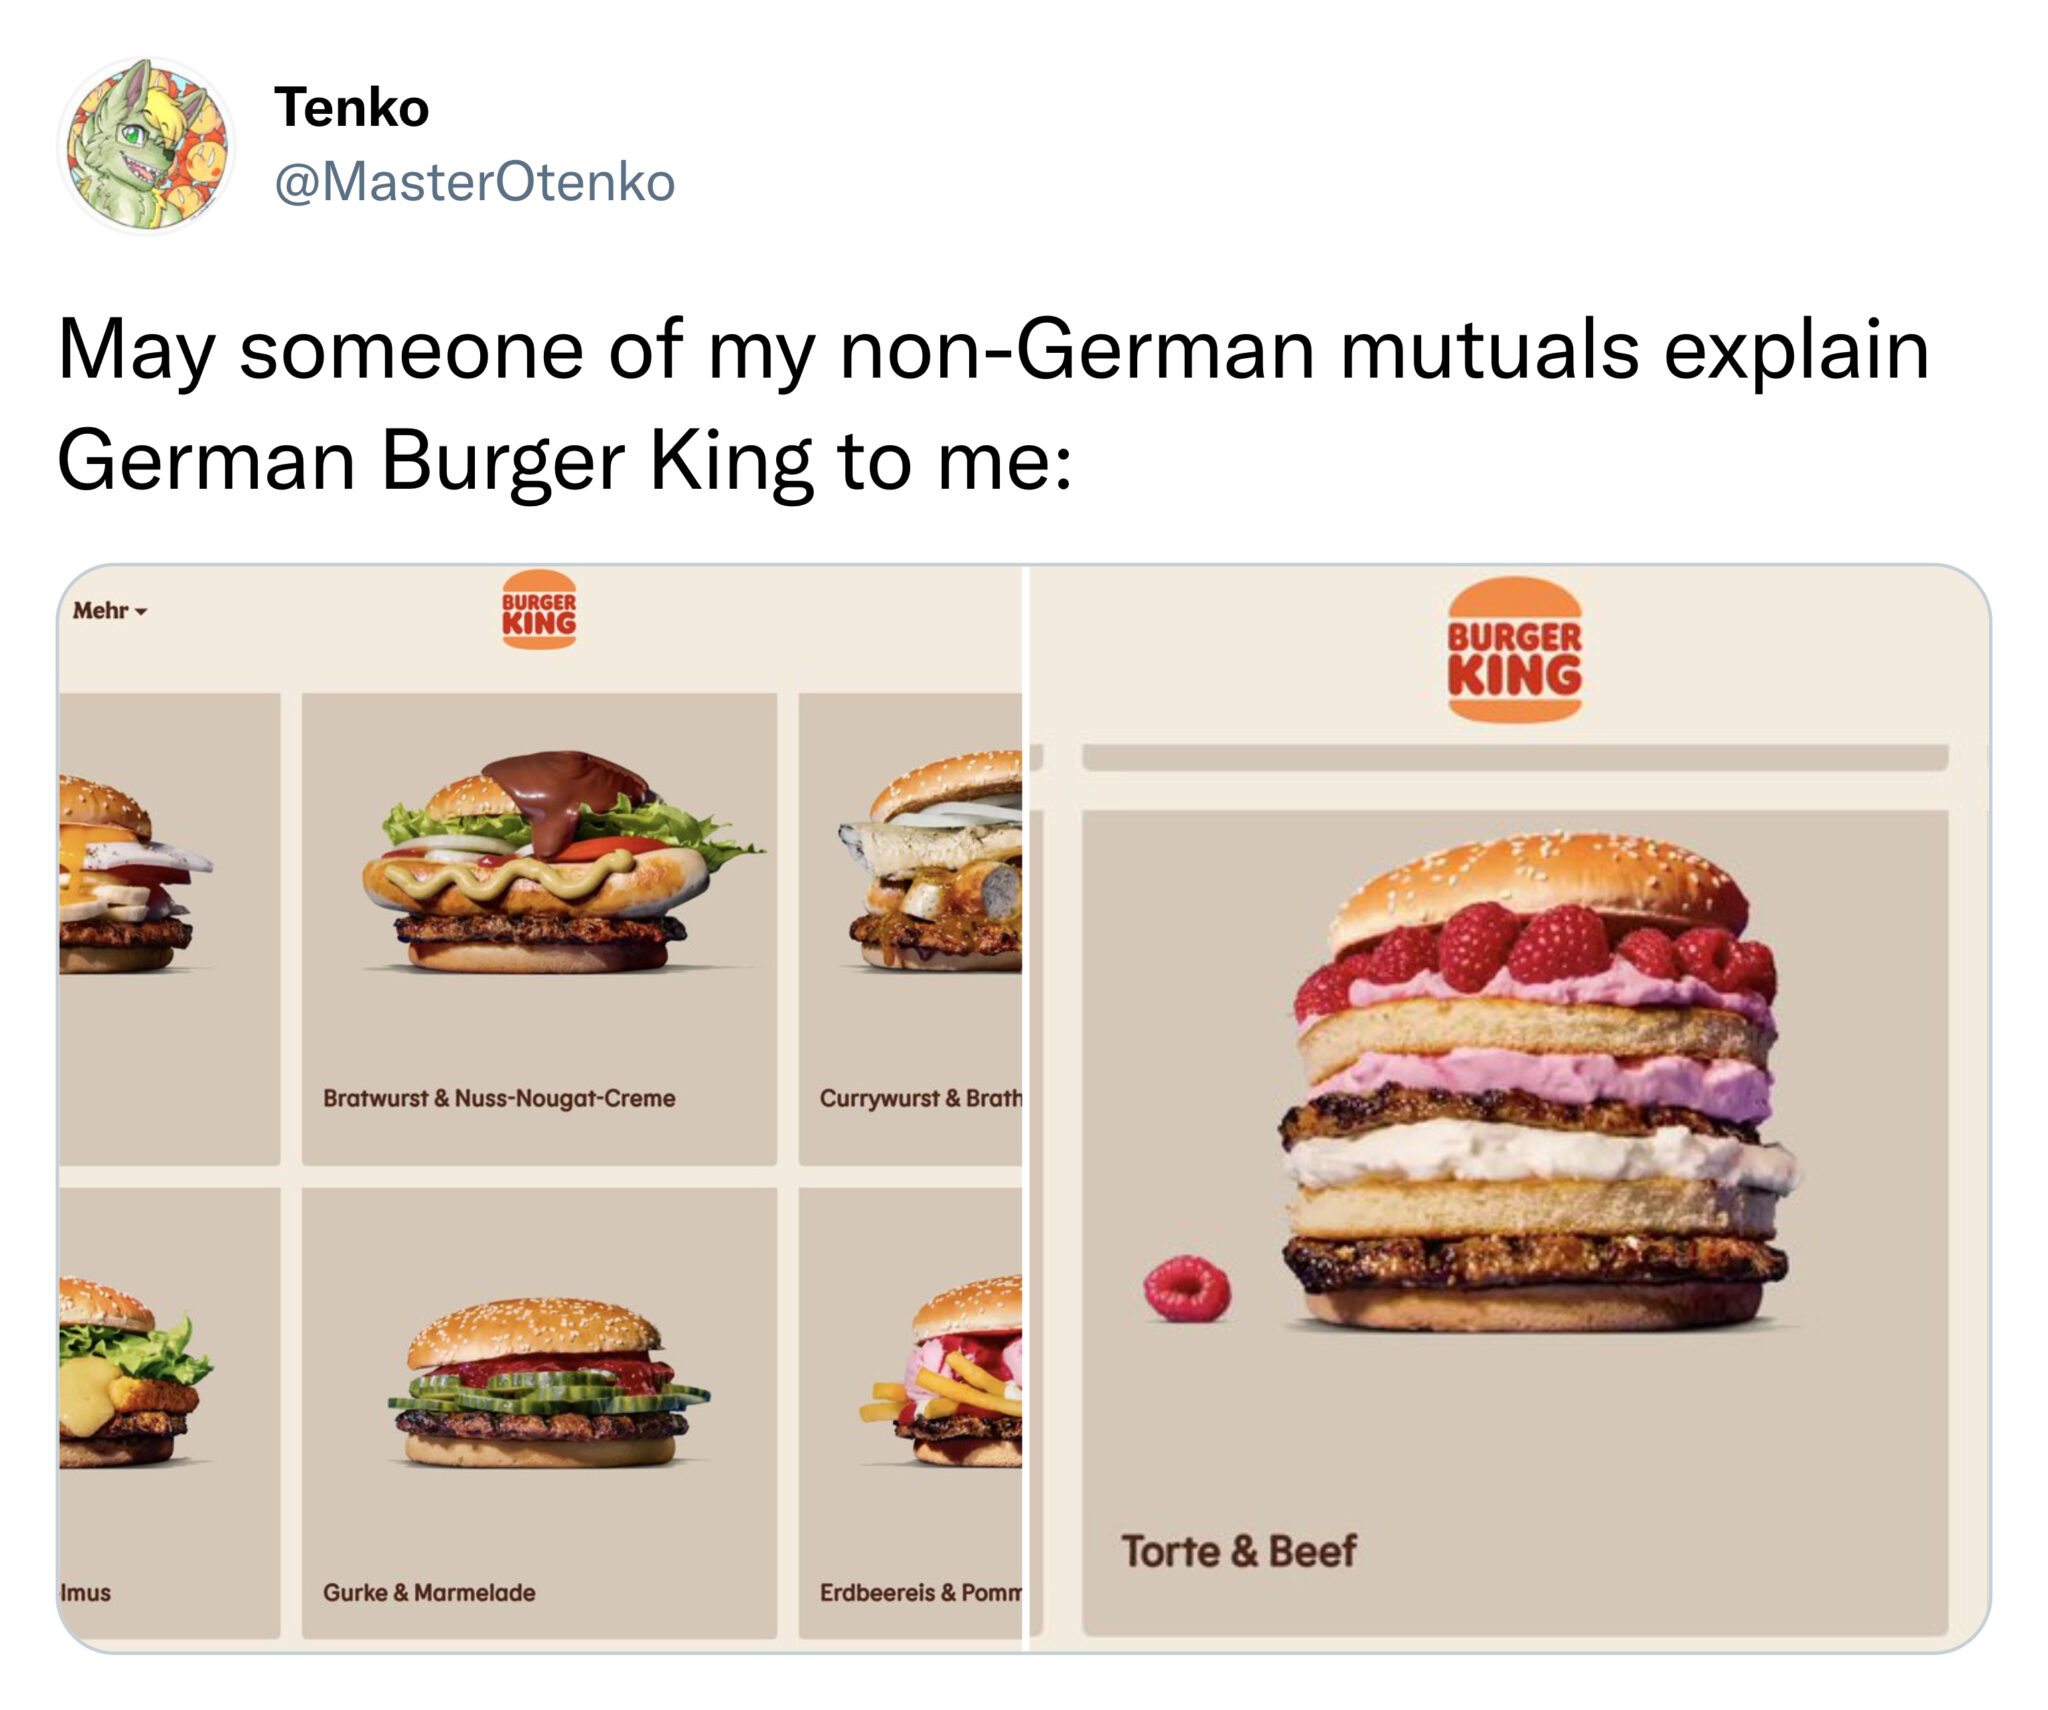 funny tweets and memes -  Tenko May someone of my nonGerman mutuals explain German Burger King to me Burger Mehr King Burger King Bratwurst & NussNougatCreme Currywurst & Brath Gurke & Marmelade Erdbeereis & Pomm Imus Torte & Beef